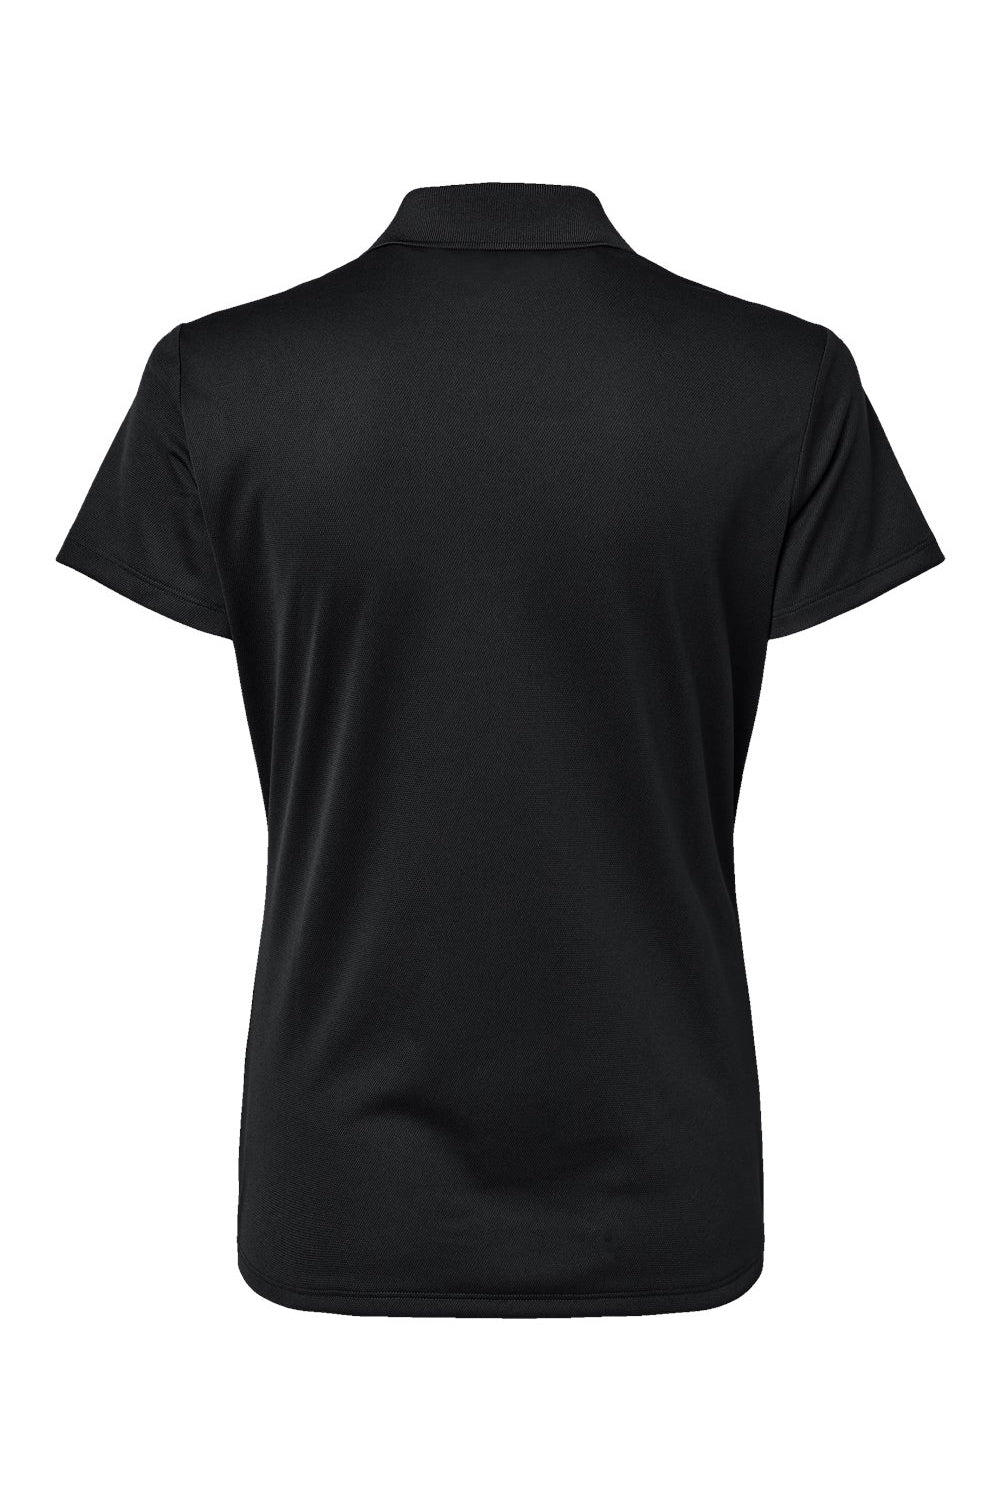 Adidas A431 Womens Basic Short Sleeve Polo Shirt Black Flat Back